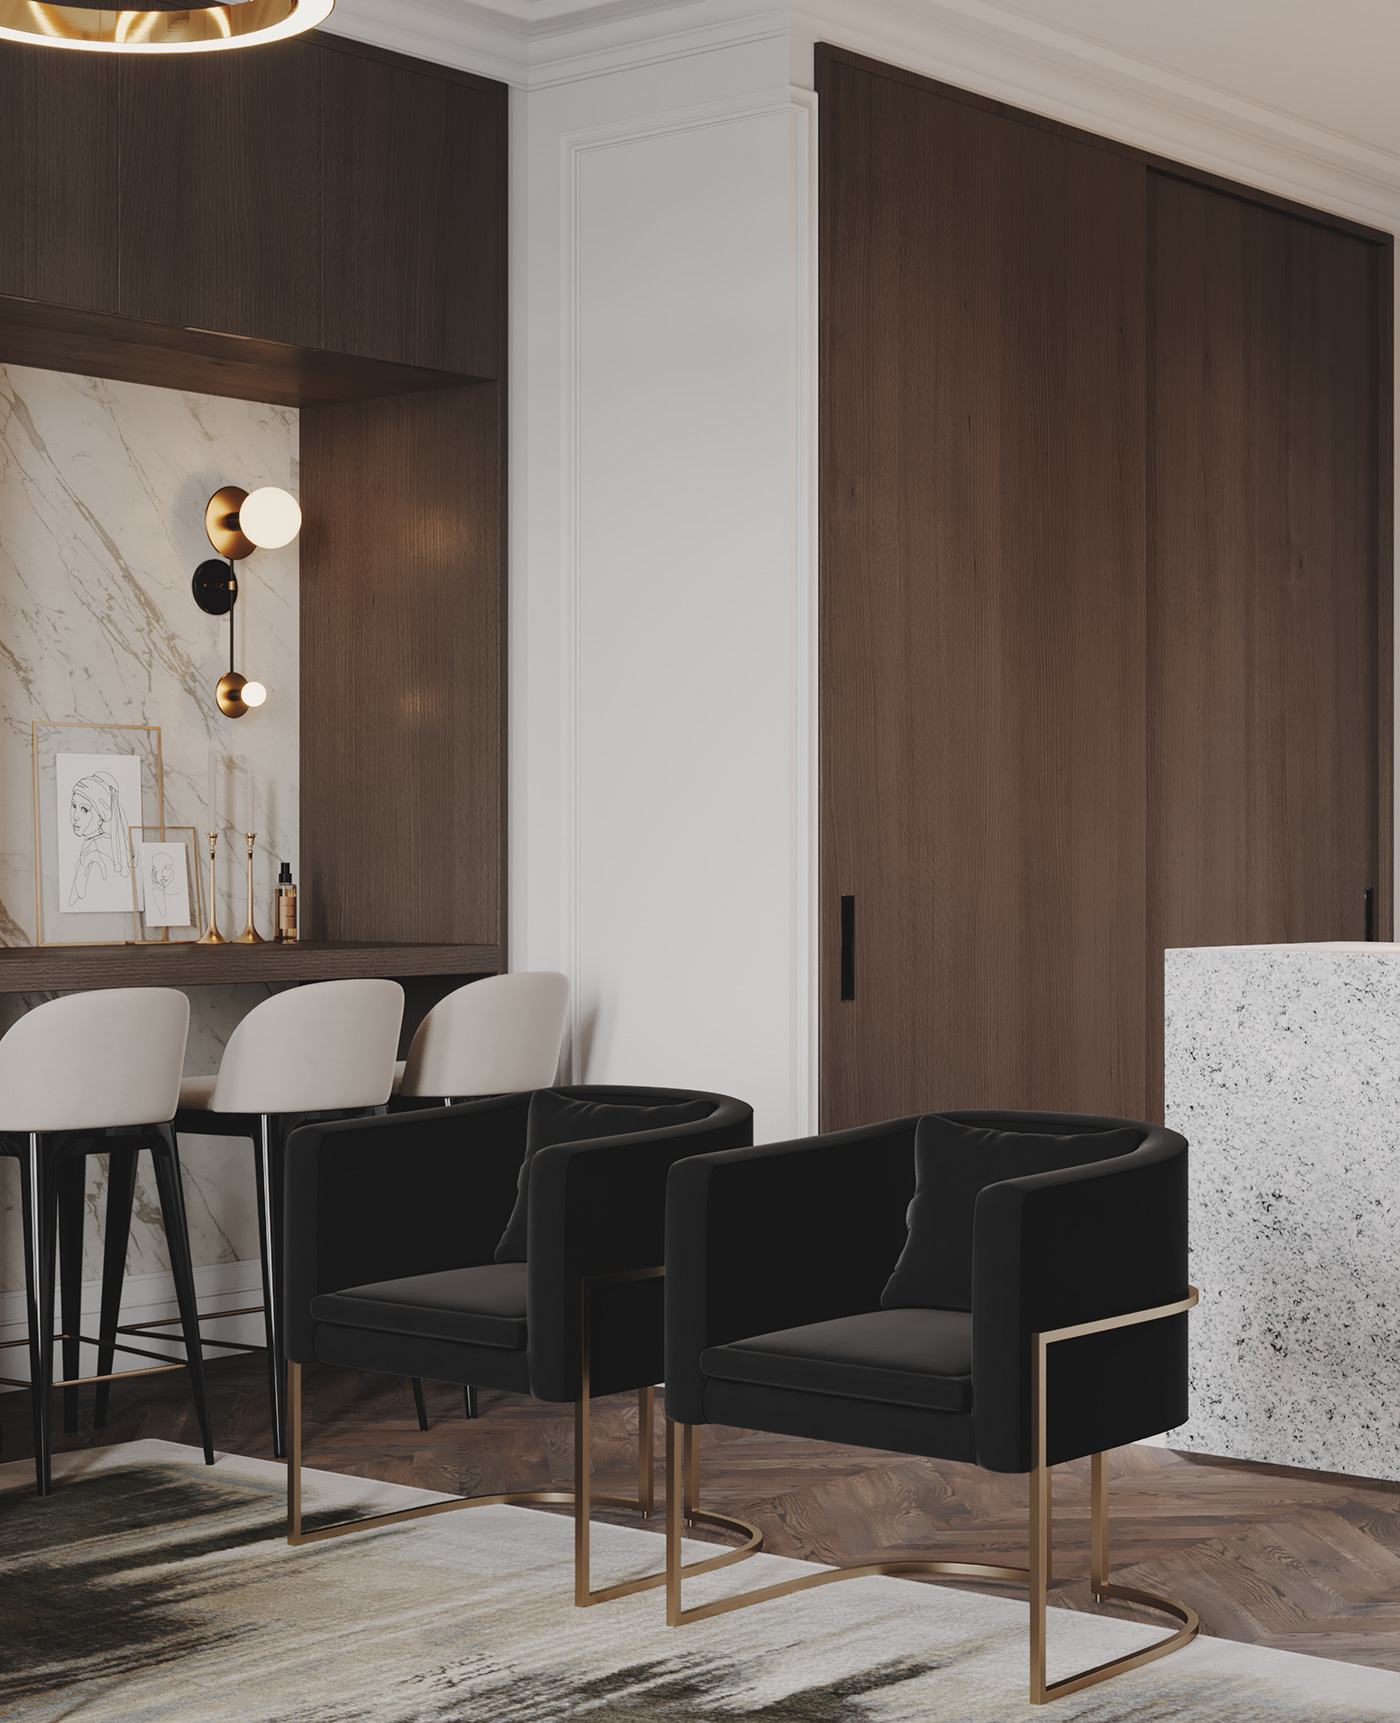 3dsmax coronarenderer interiordesign Interior architecture apartments moderninterior 3dmax Render